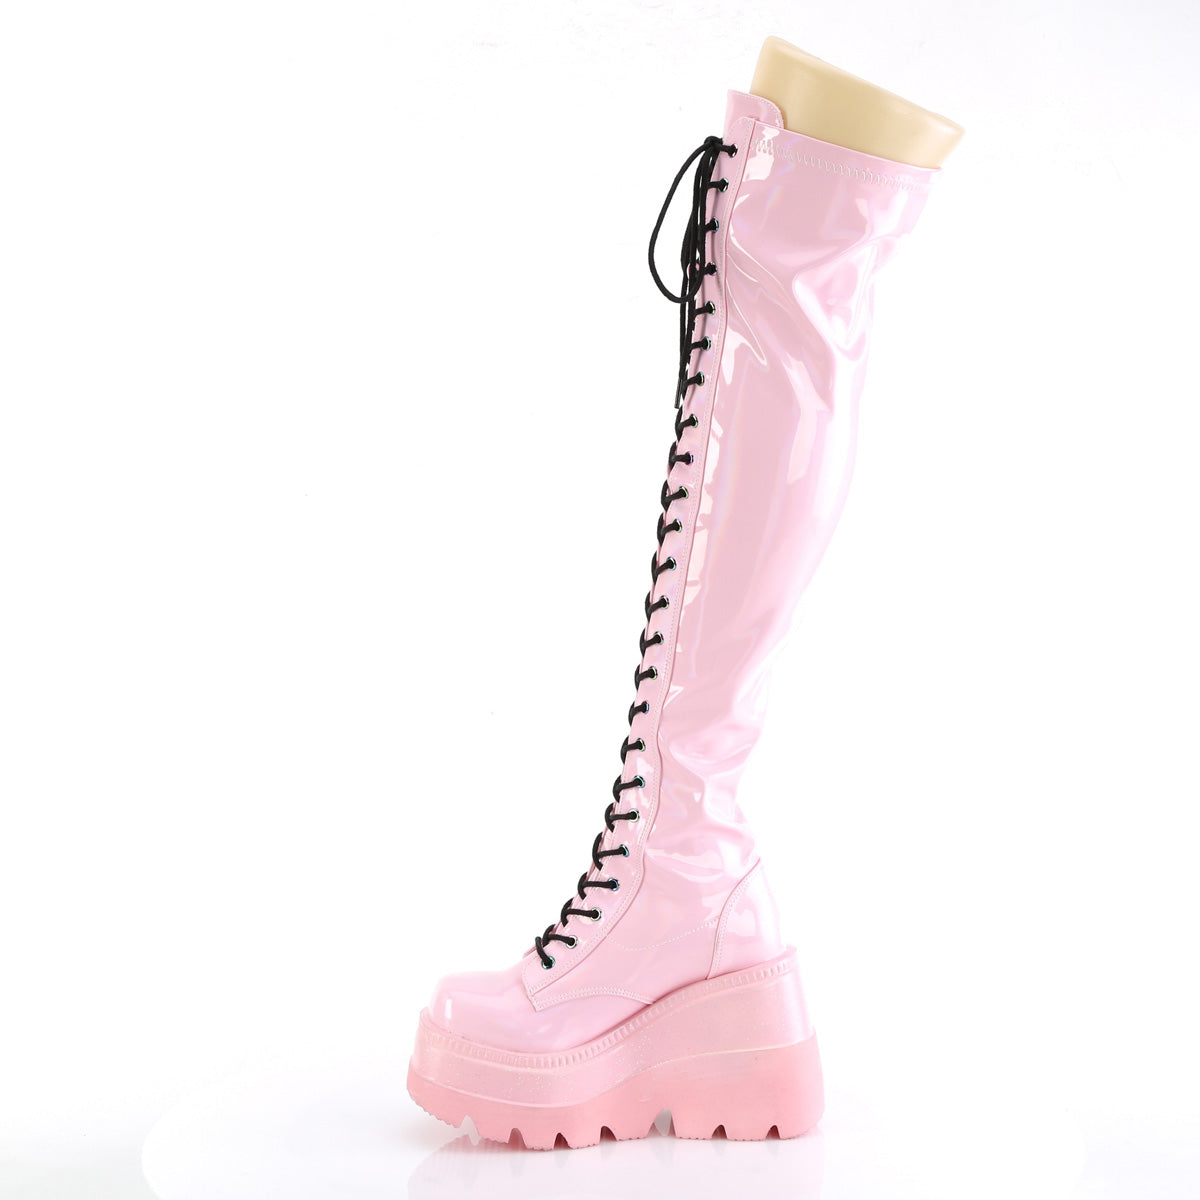 SHAKER-374 Demoniacult Alternative Footwear Women's Over-the-Knee Boots